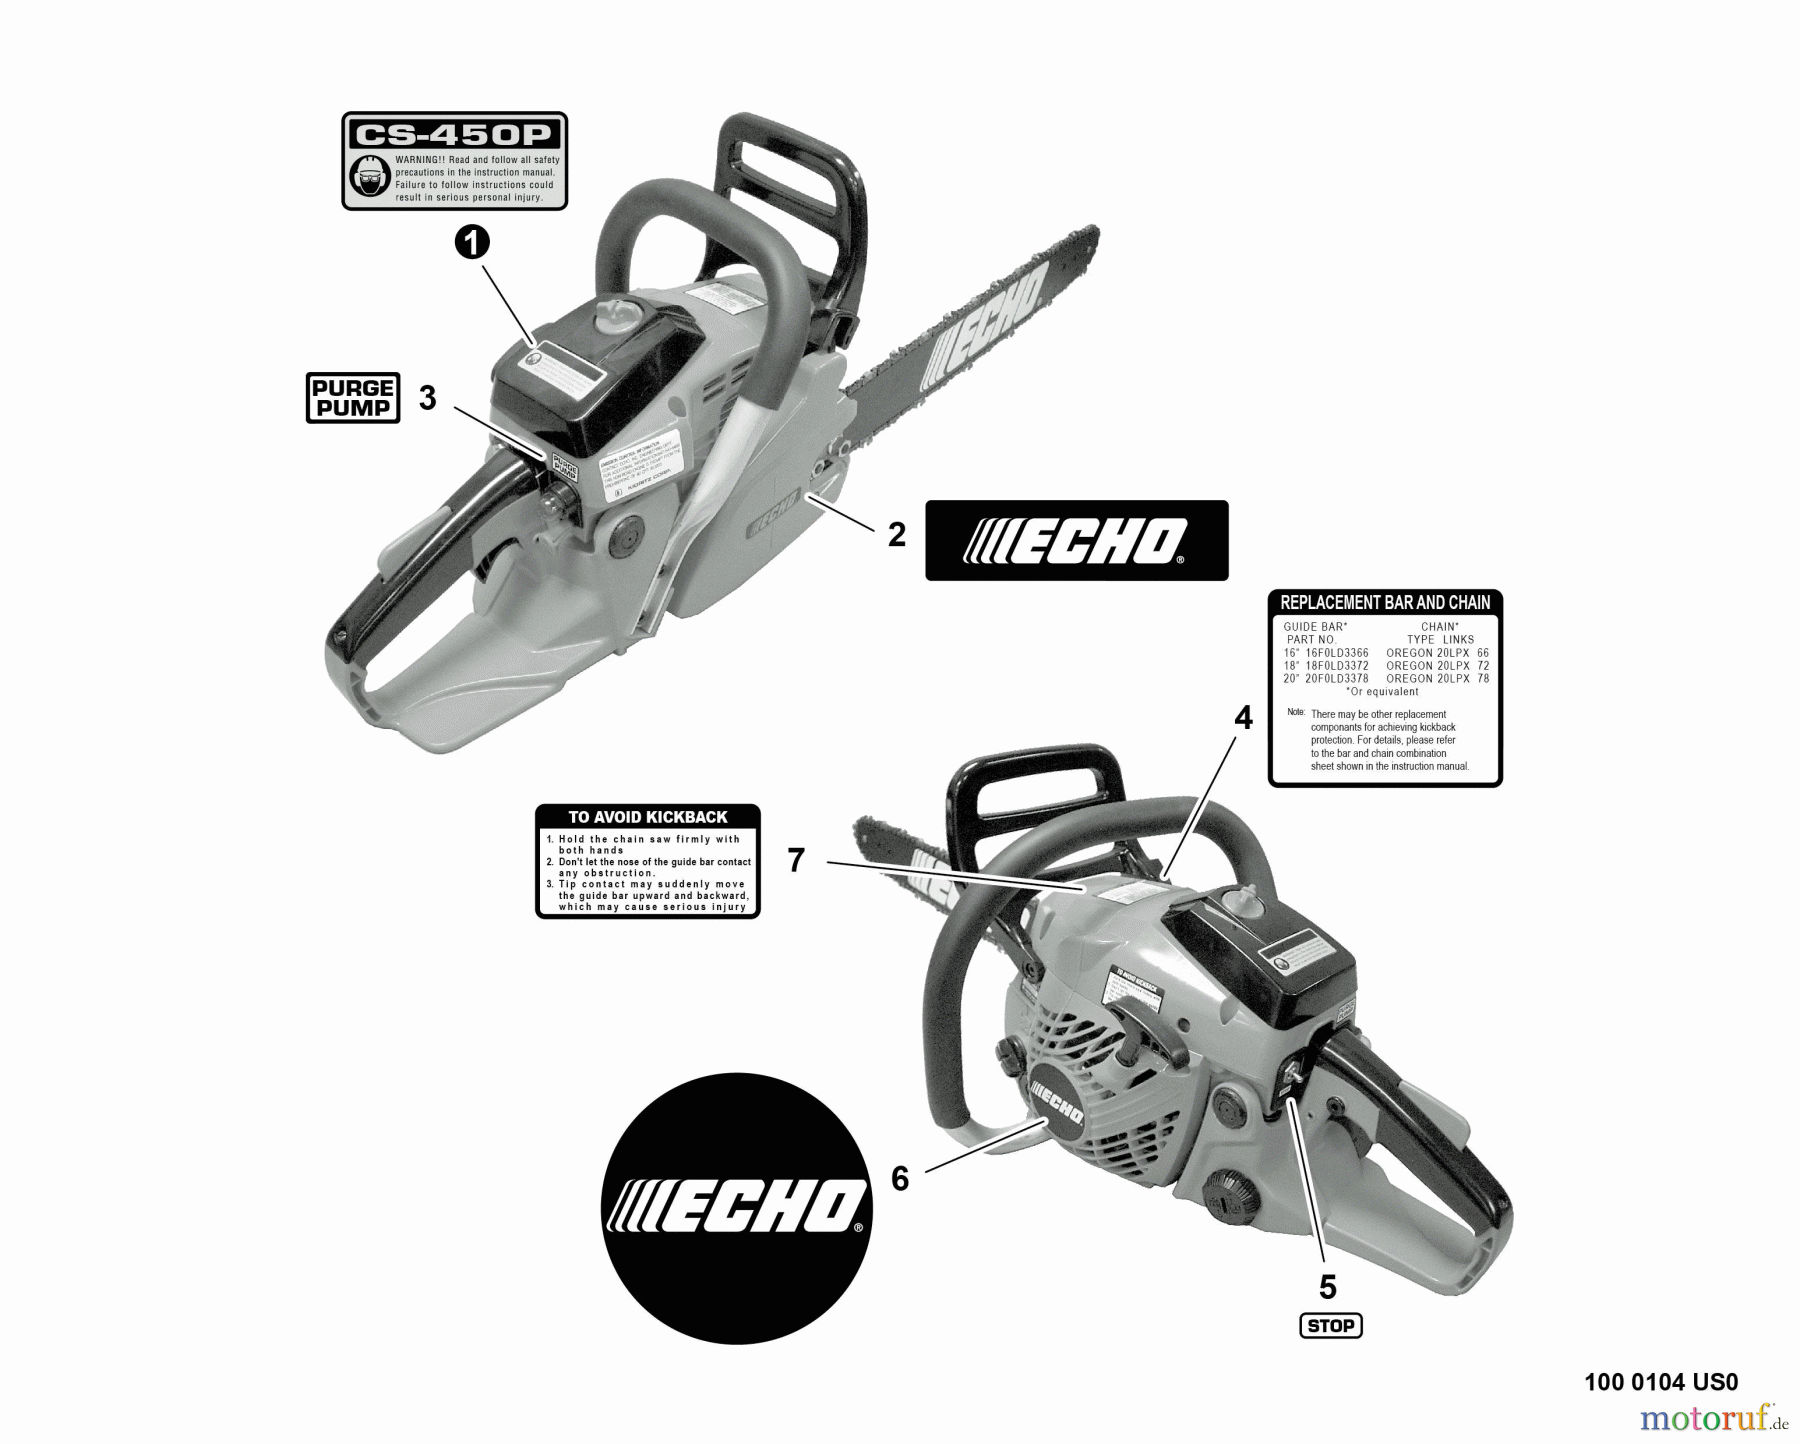  Echo Sägen, Kettensägen CS-450P - Echo Chainsaw, Labels